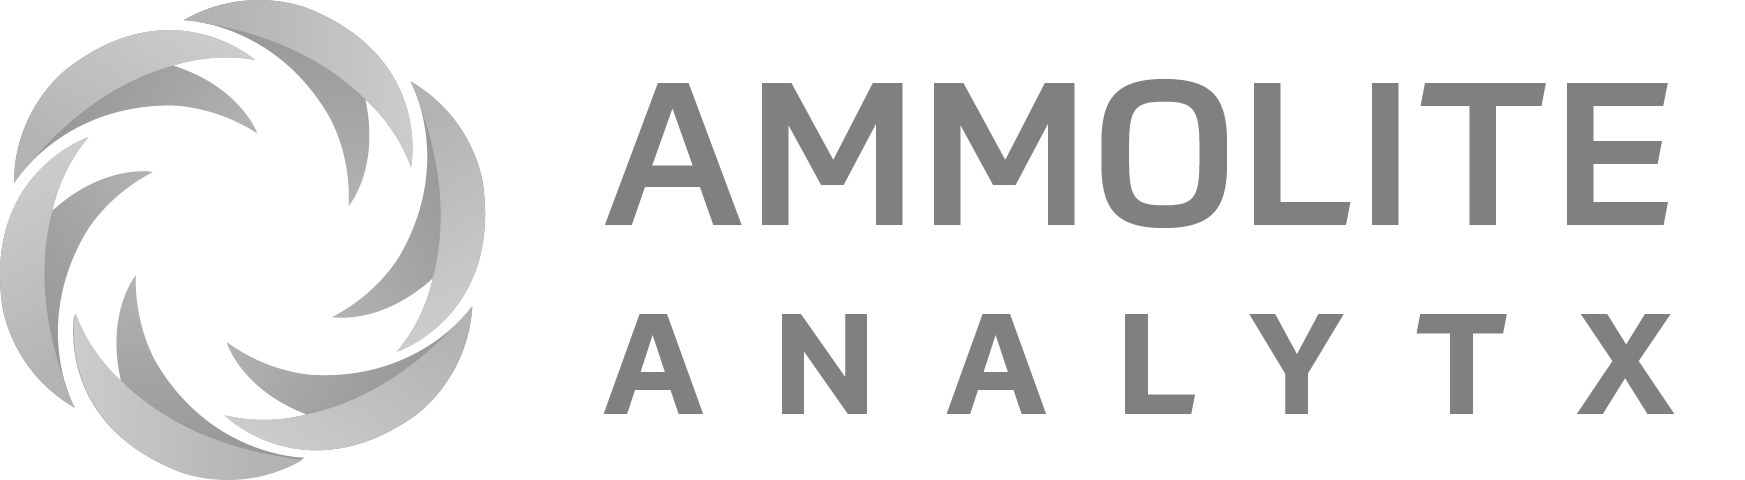 Ammolite Analytx - Cybersecurity Company